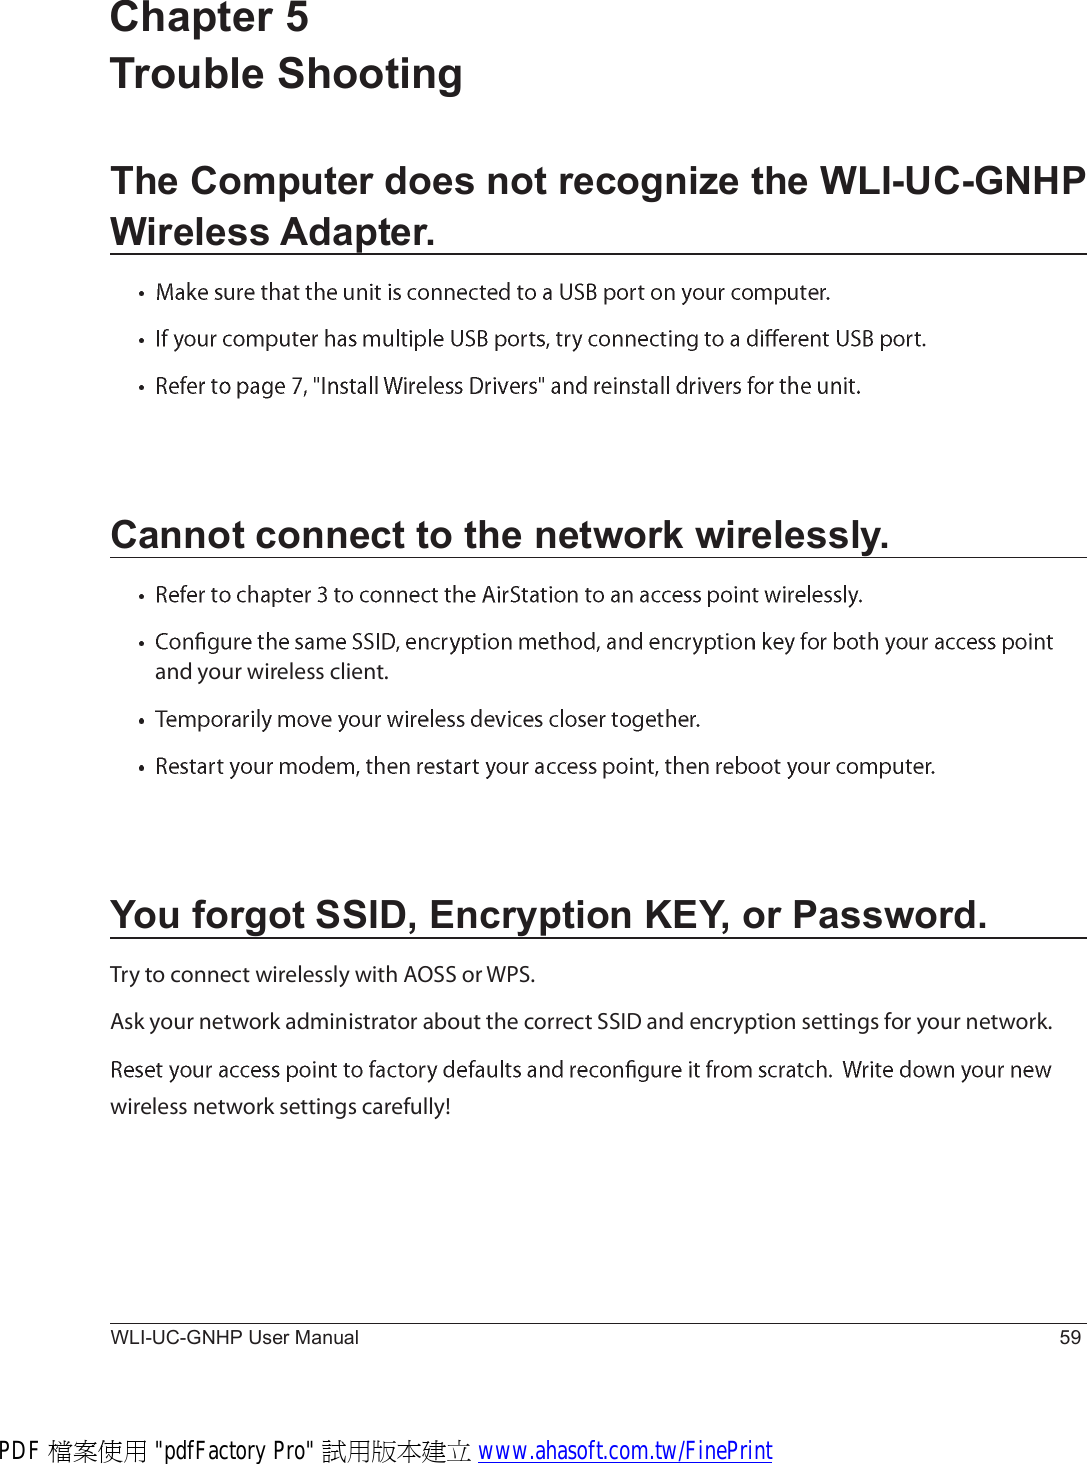 WLI-UC-GNHP User Manual 59Chapter 5 Trouble ShootingThe Computer does not recognize the WLI-UC-GNHP Wireless Adapter.Cannot connect to the network wirelessly.¿²¼ §±«® ©·®»´»-- ½´·»²¬òYou forgot SSID, Encryption KEY, or Password.Ì®§ ¬± ½±²²»½¬ ©·®»´»--´§ ©·¬¸ ßÑÍÍ ±® ÉÐÍòß-µ §±«® ²»¬©±®µ ¿¼³·²·-¬®¿¬±® ¿¾±«¬ ¬¸» ½±®®»½¬ ÍÍ×Ü ¿²¼ »²½®§°¬·±² -»¬¬·²¹- º±® §±«® ²»¬©±®µò©·®»´»-- ²»¬©±®µ -»¬¬·²¹- ½¿®»º«´´§ÿ  PDF 檔案使用 &quot;pdfFactory Pro&quot; 試用版本建立 www.ahasoft.com.tw/FinePrint